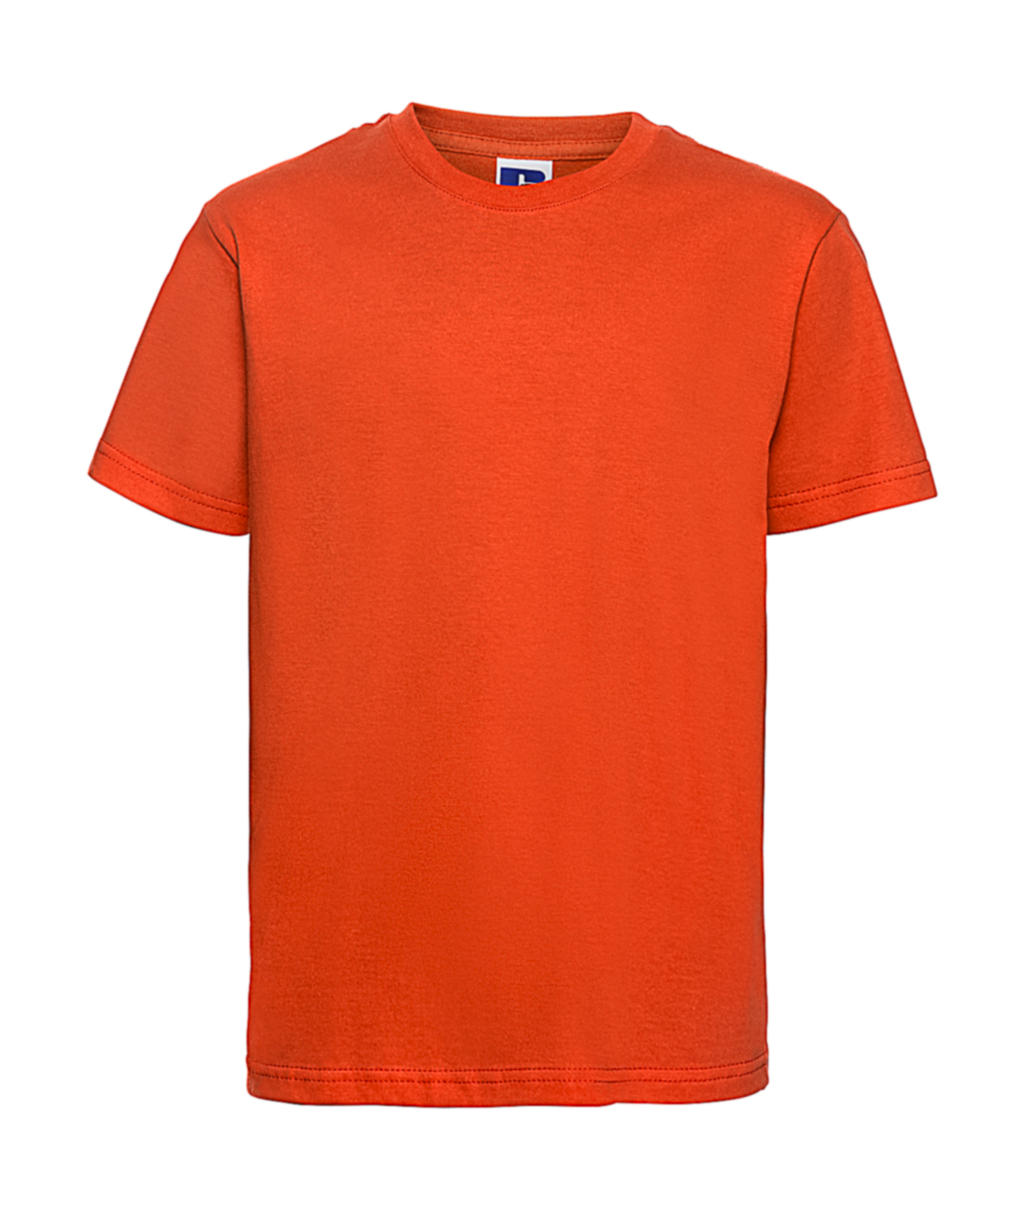 Detské priliehavé tričko - orange